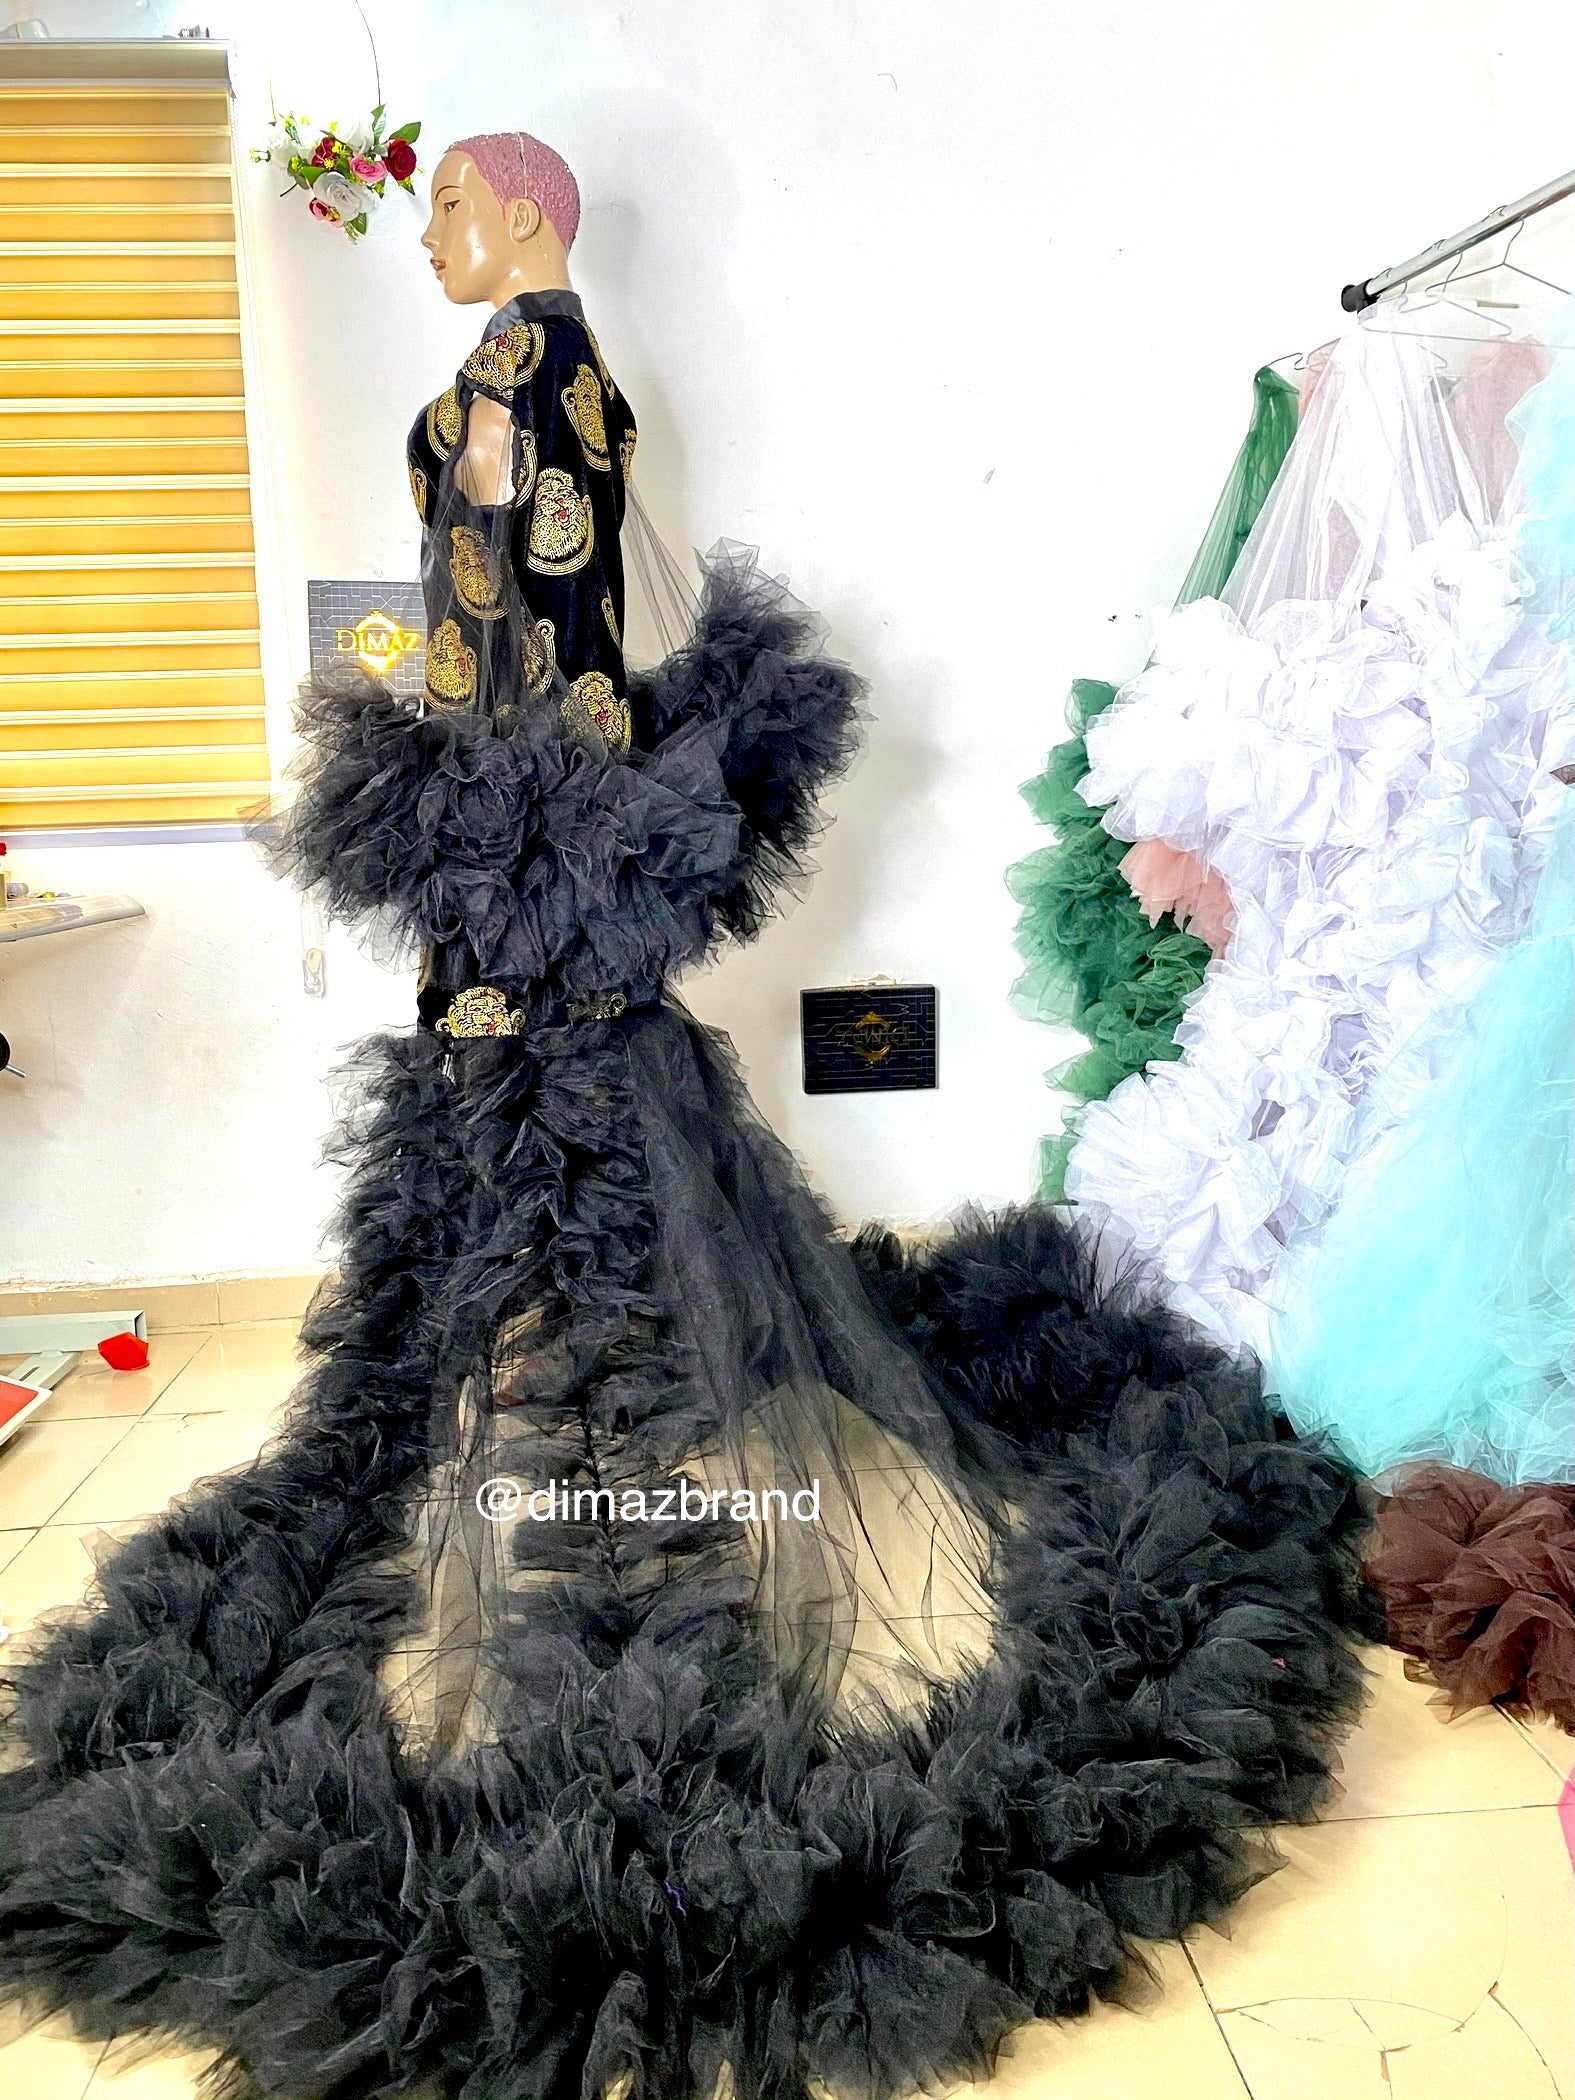 Igbo bride isiagu tulle wedding robe - Dimaz